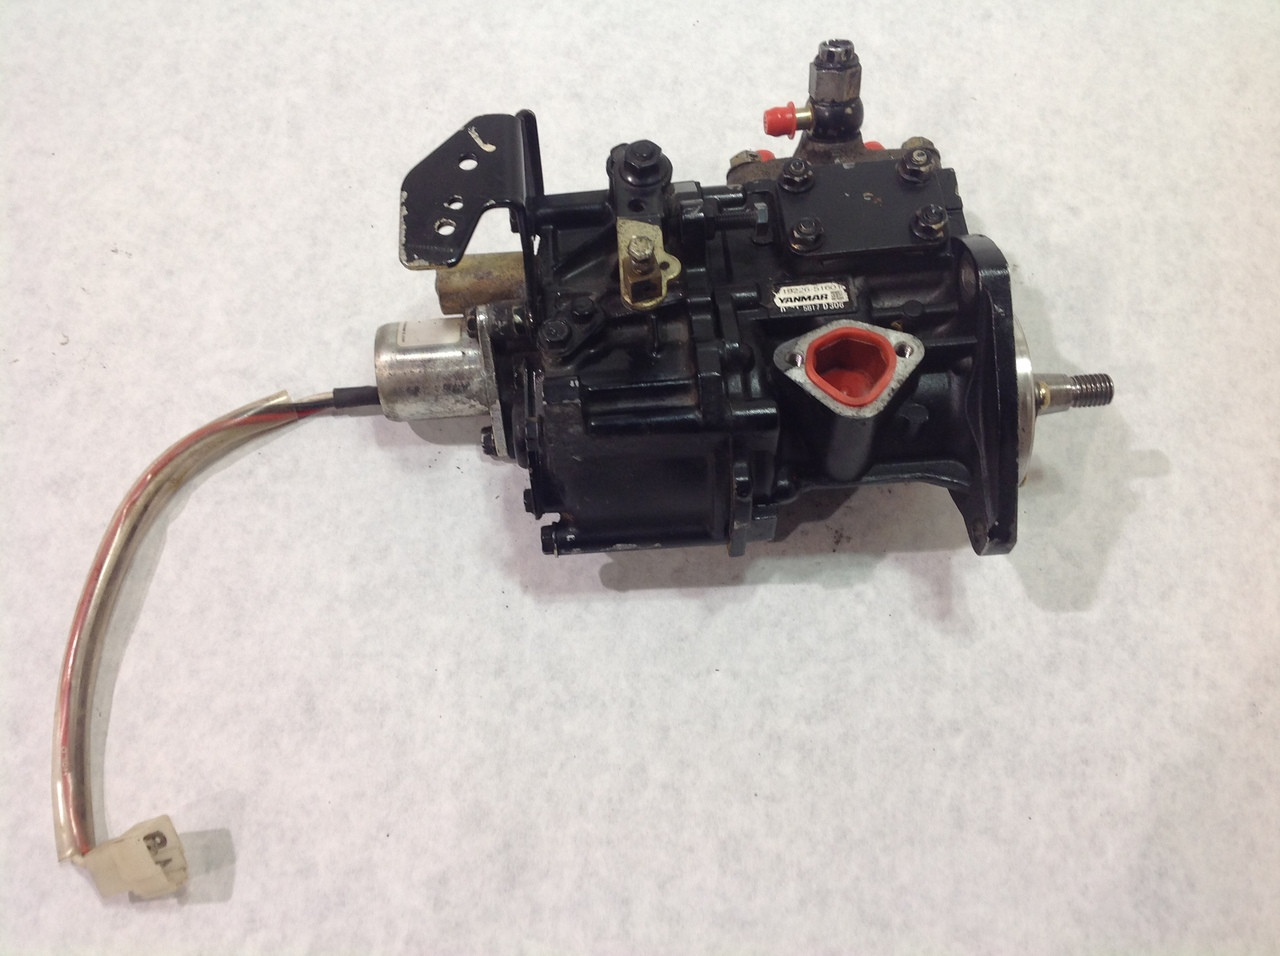 John Deere Used Fuel Injection Pump - AM880169